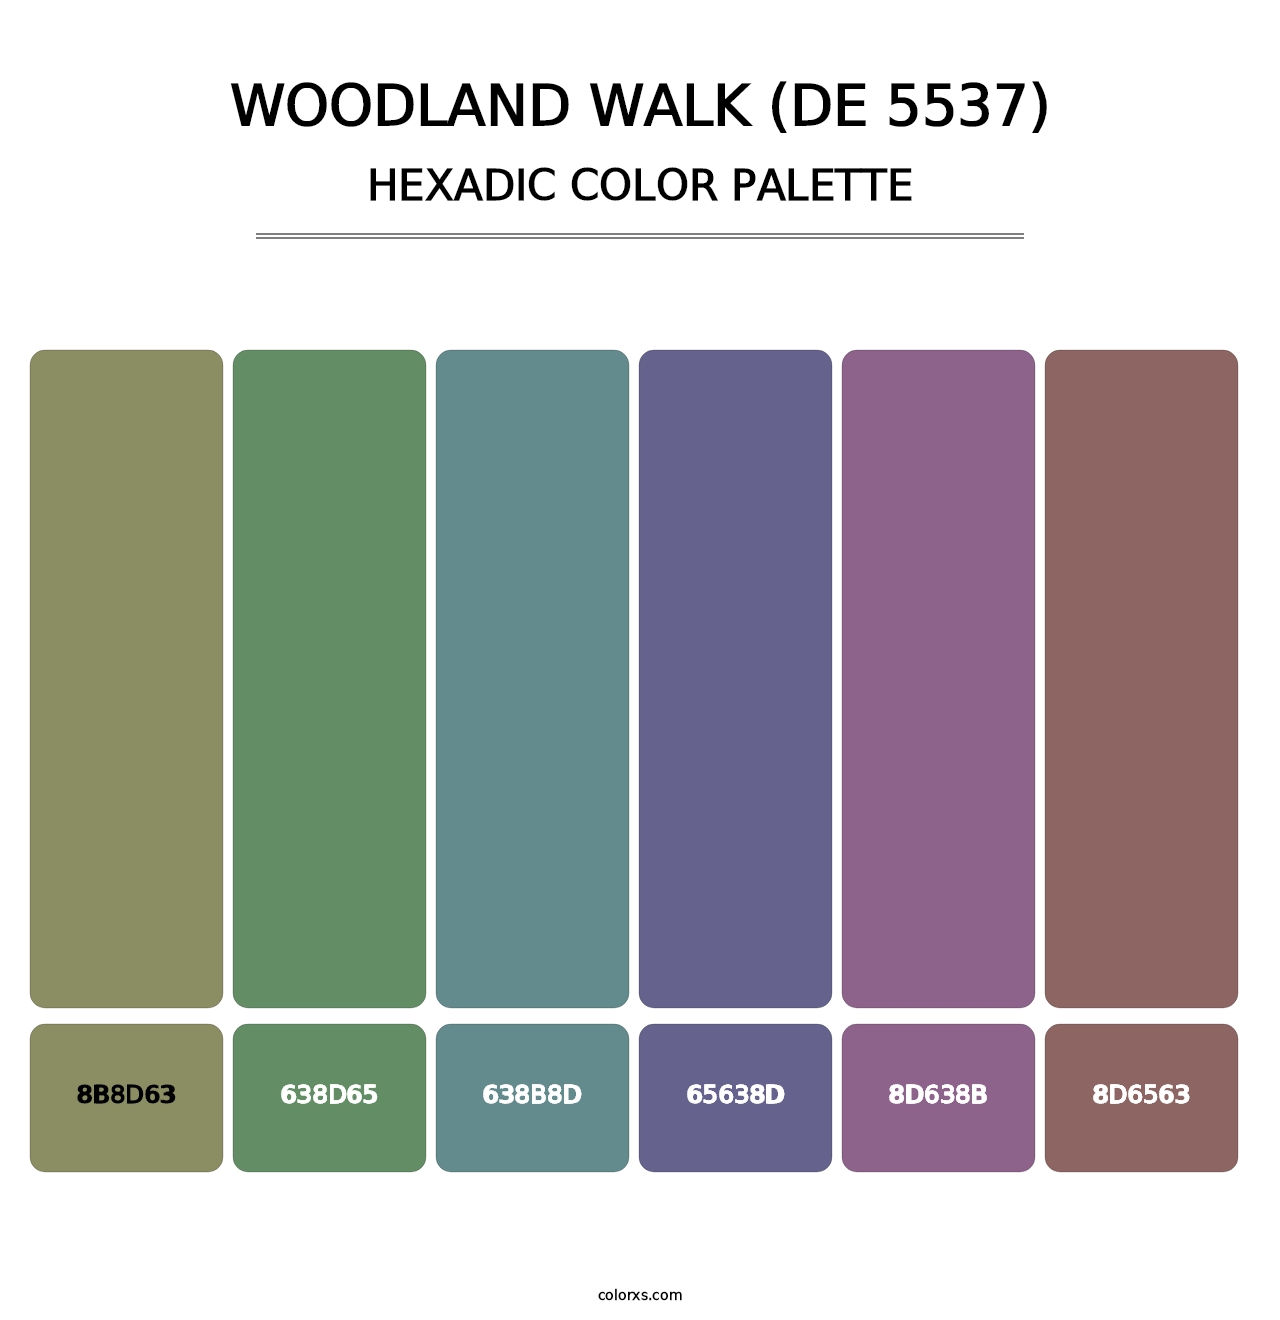 Woodland Walk (DE 5537) - Hexadic Color Palette